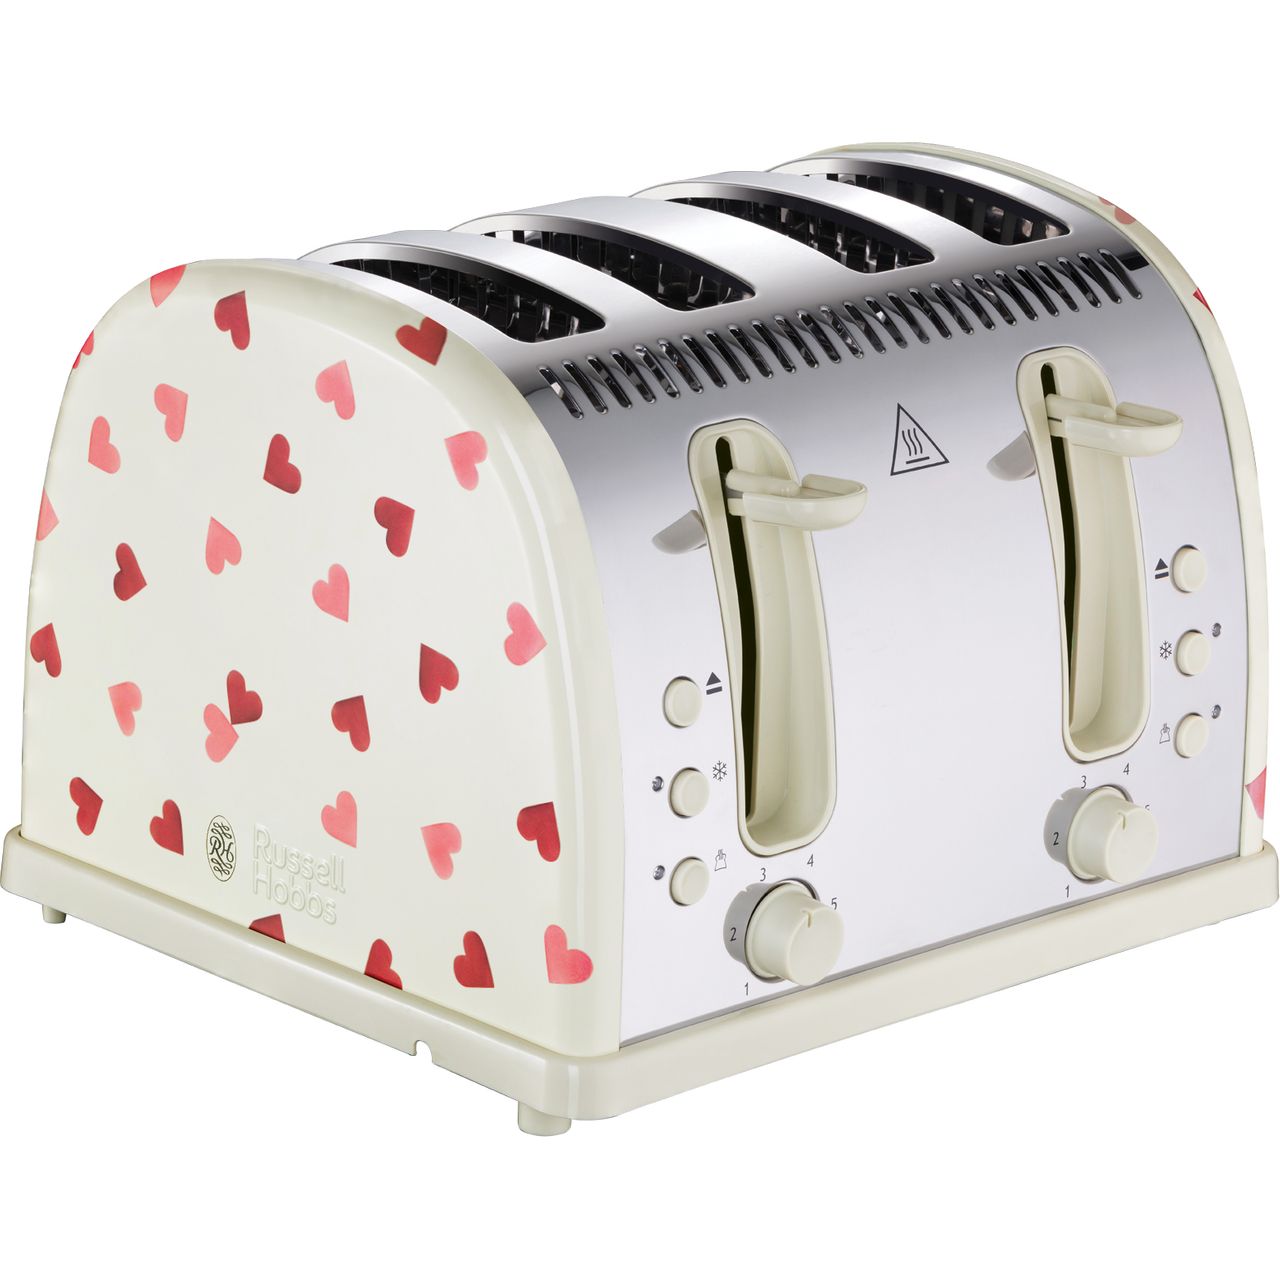 Russell Hobbs Emma Bridgewater Pink Hearts Design 28350 4 Slice Toaster Review